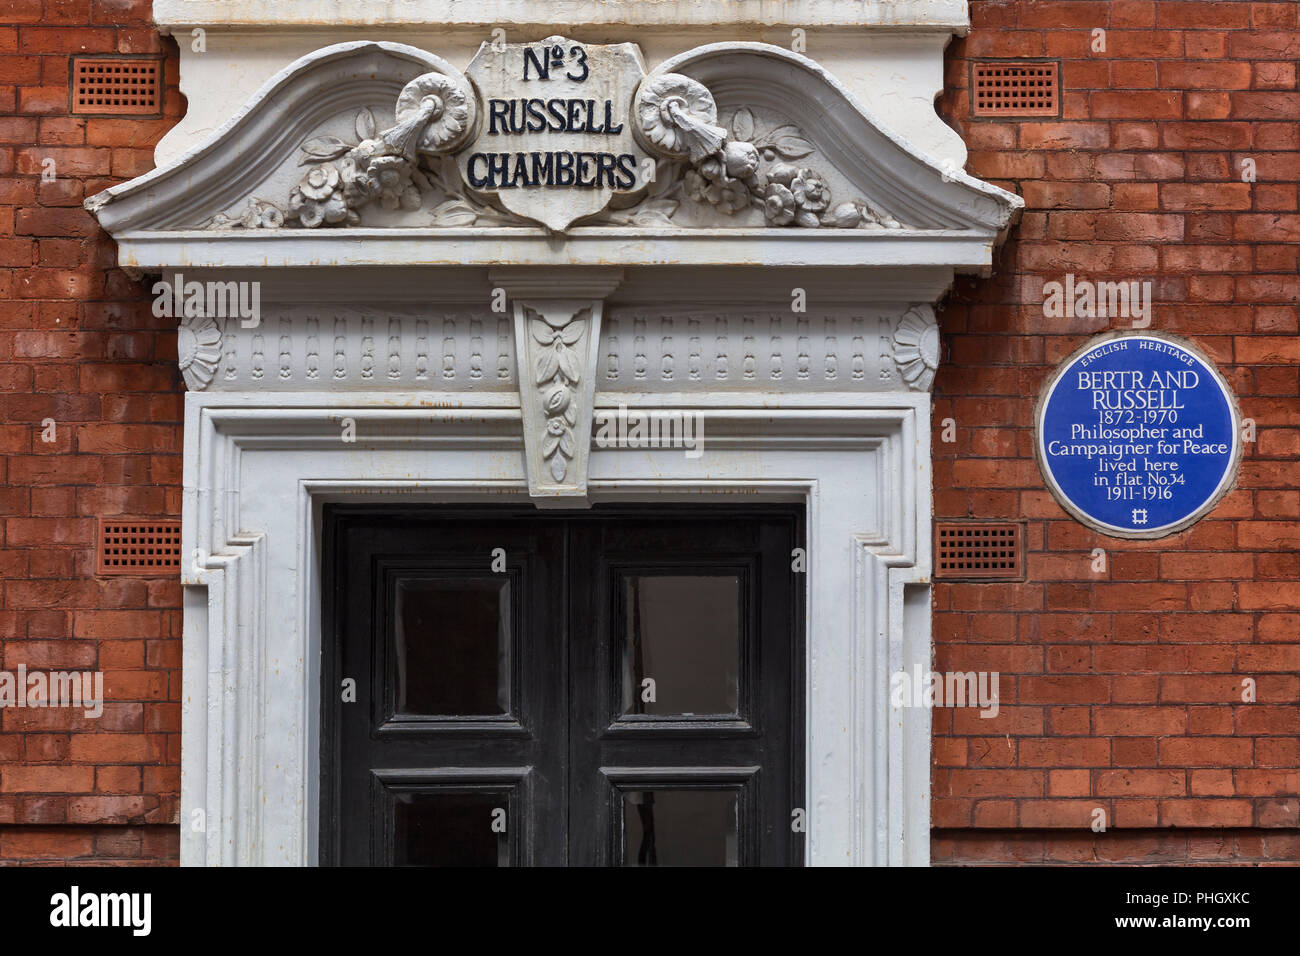 Bertrand Russel house, Russel chambers, Holborn, London, England, UK Stock Photo